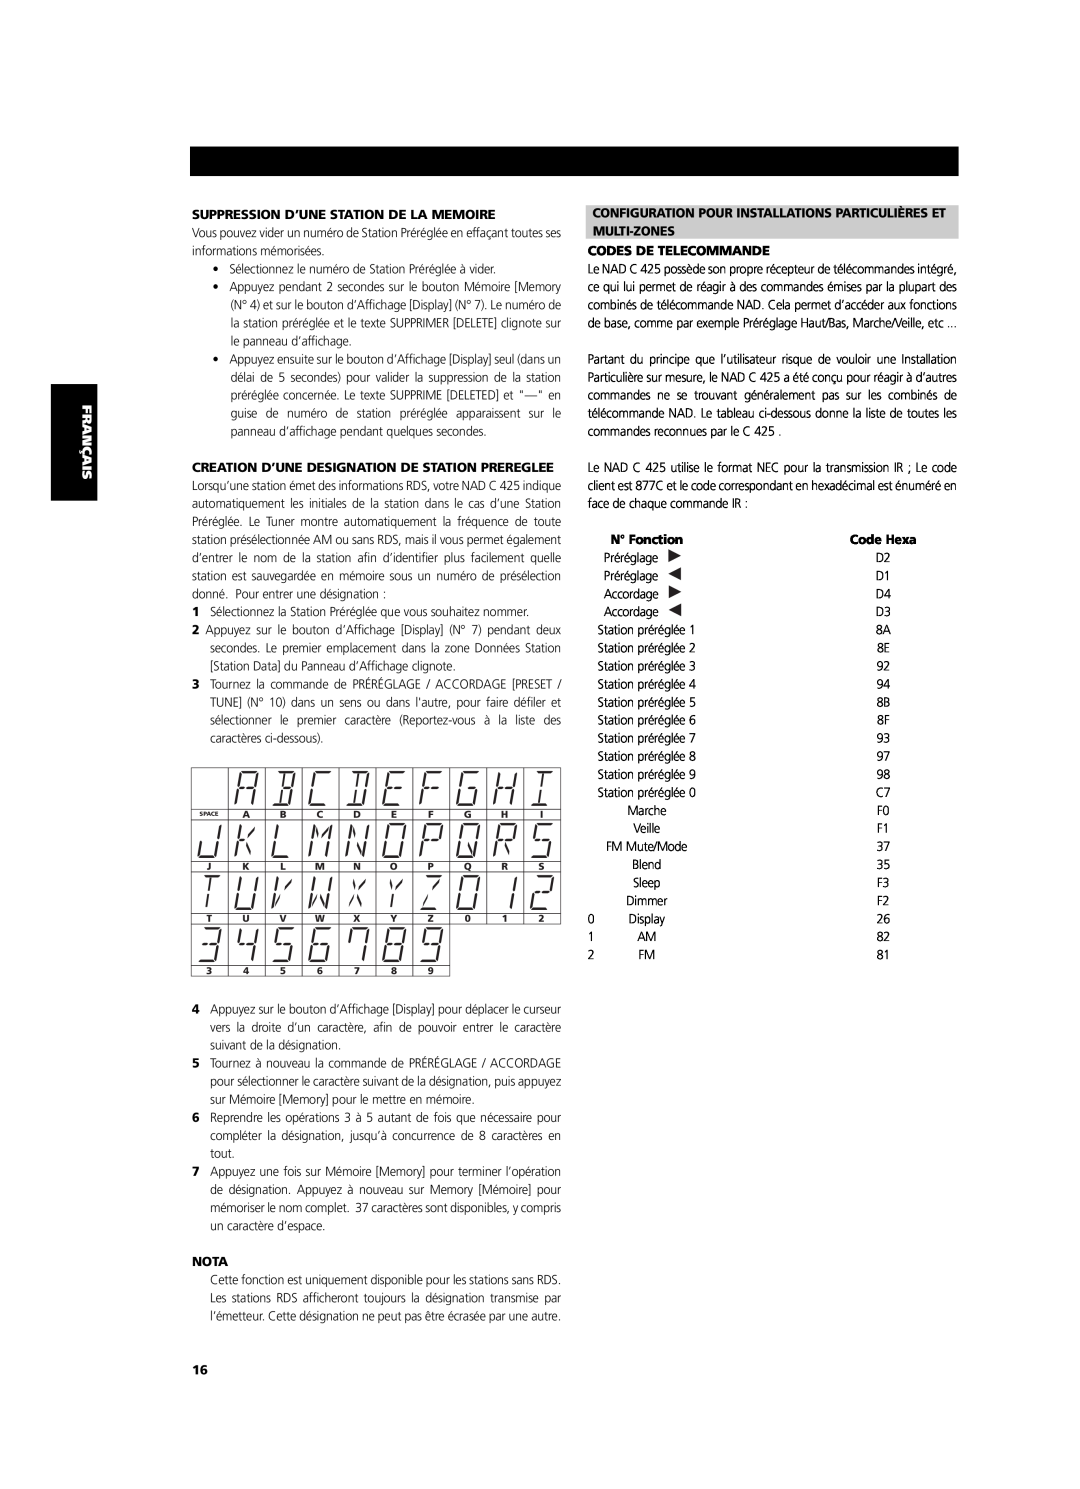 NAD C 425 owner manual Suppression D’Une Station De La Memoire, Multi-Zones, Codes De Telecommande, Code Hexa, Nota 